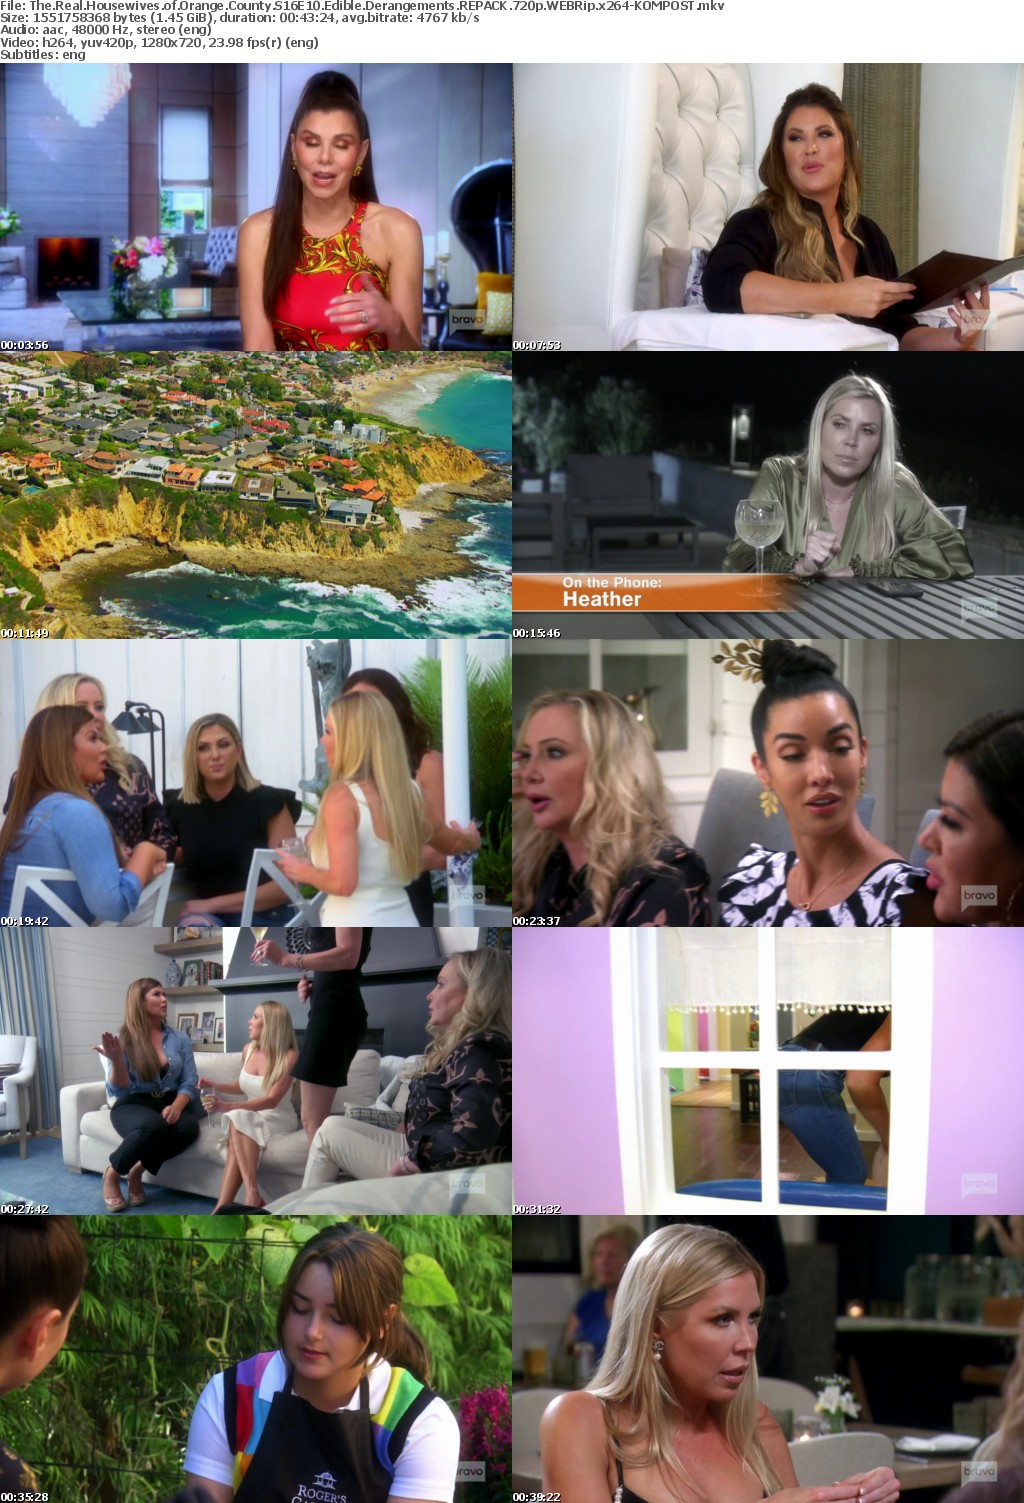 The Real Housewives of Orange County S16E10 Edible Derangements REPACK 720p WEBRip x264-KOMPOST